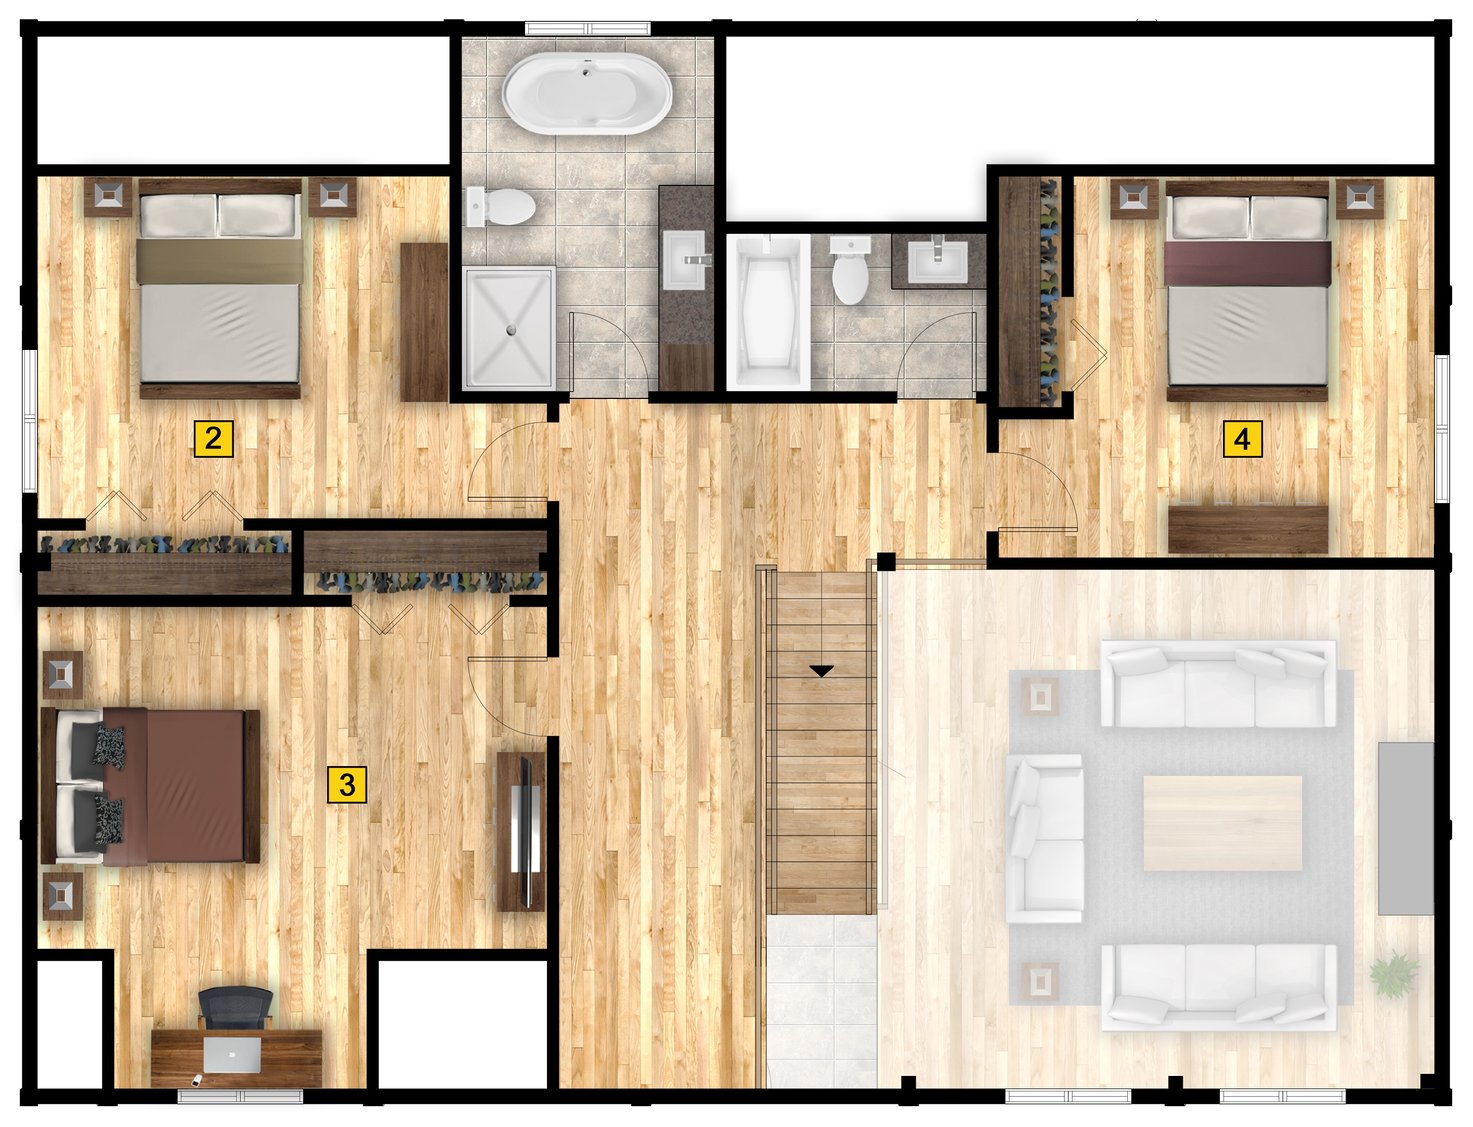 Denali floor plan 2